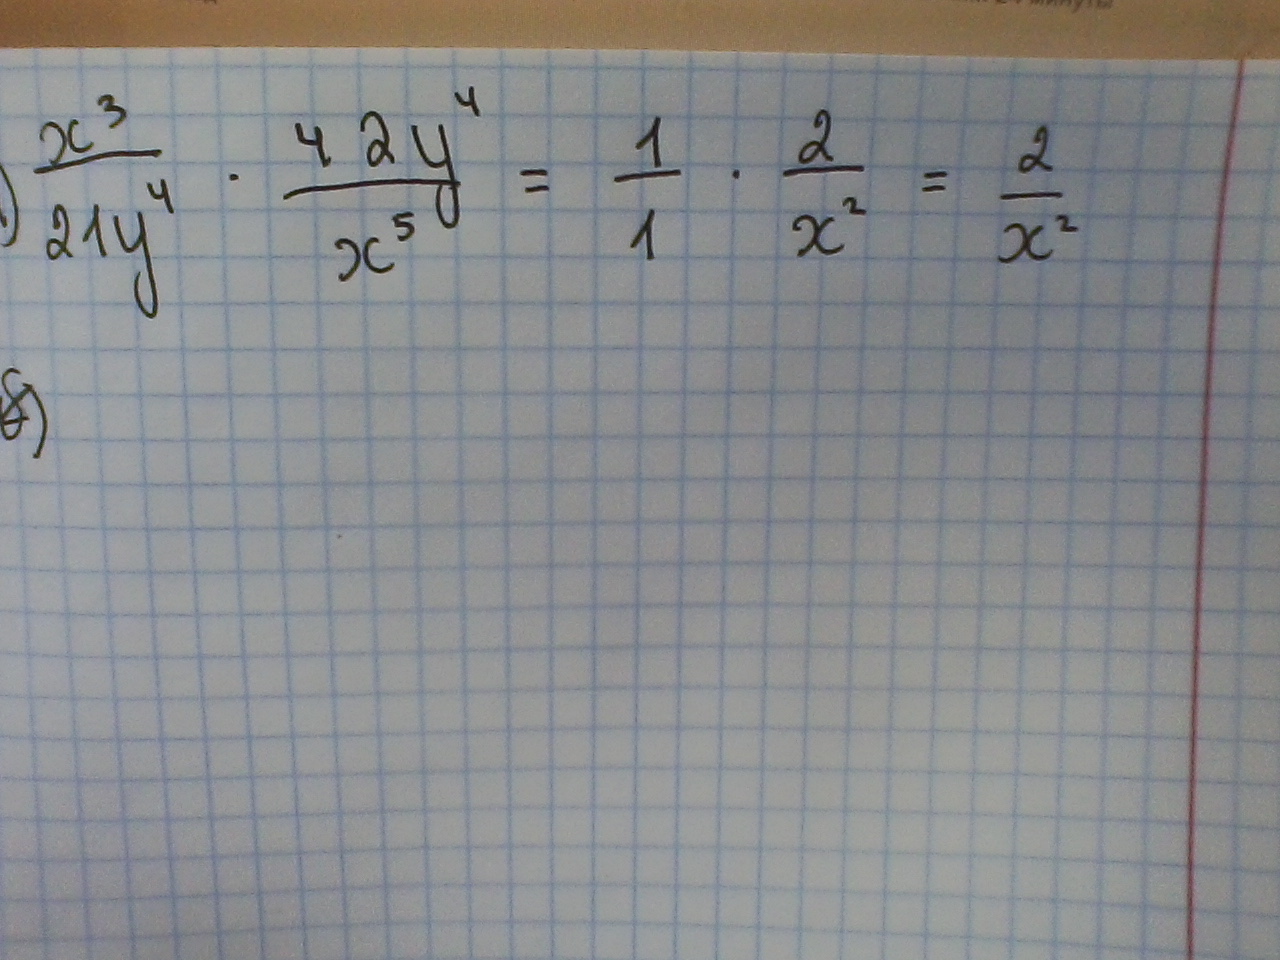 Представьте в виде дроби выражение 3. Представьте в виде дроби выражение (x-2)(2x=3). Представьте в виде дроби выражение 4x-3y. Представьте в виде дроби выражение 3x / 4 x-4. Представьте в виде дроби 4x 3/7y^3.